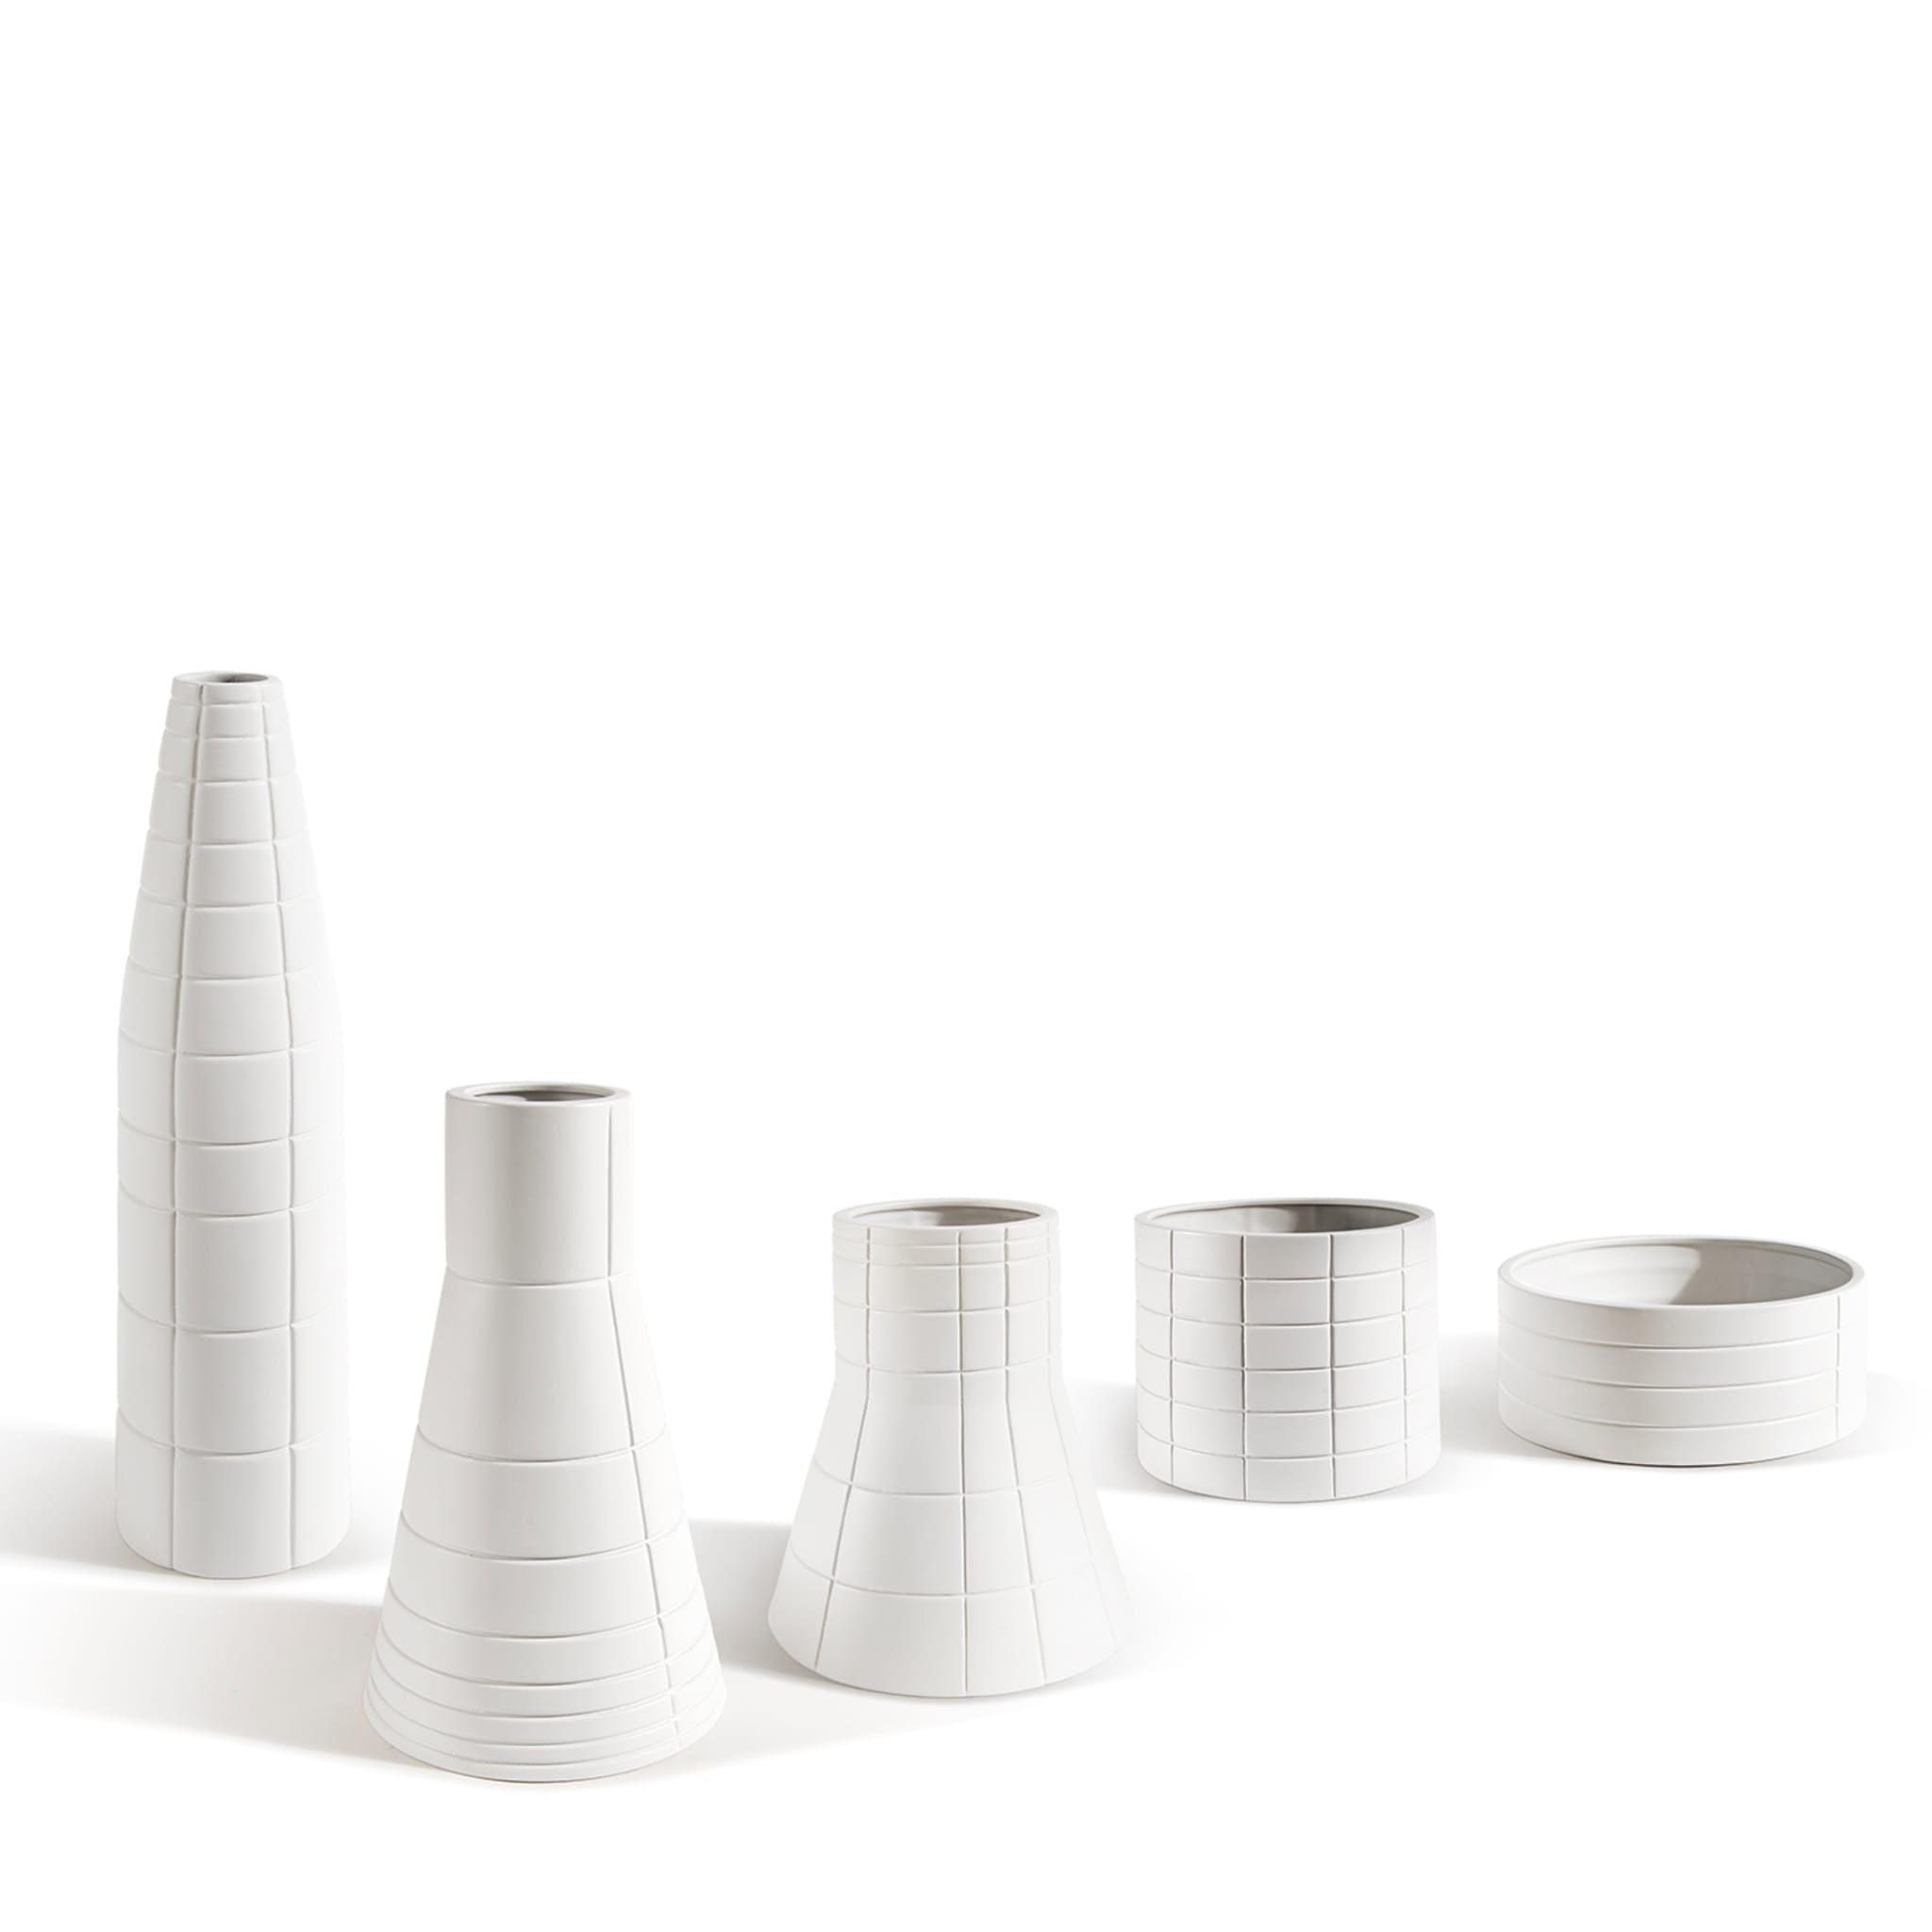 Rikuadra White Ceramic Vase #2 - Alternative view 1